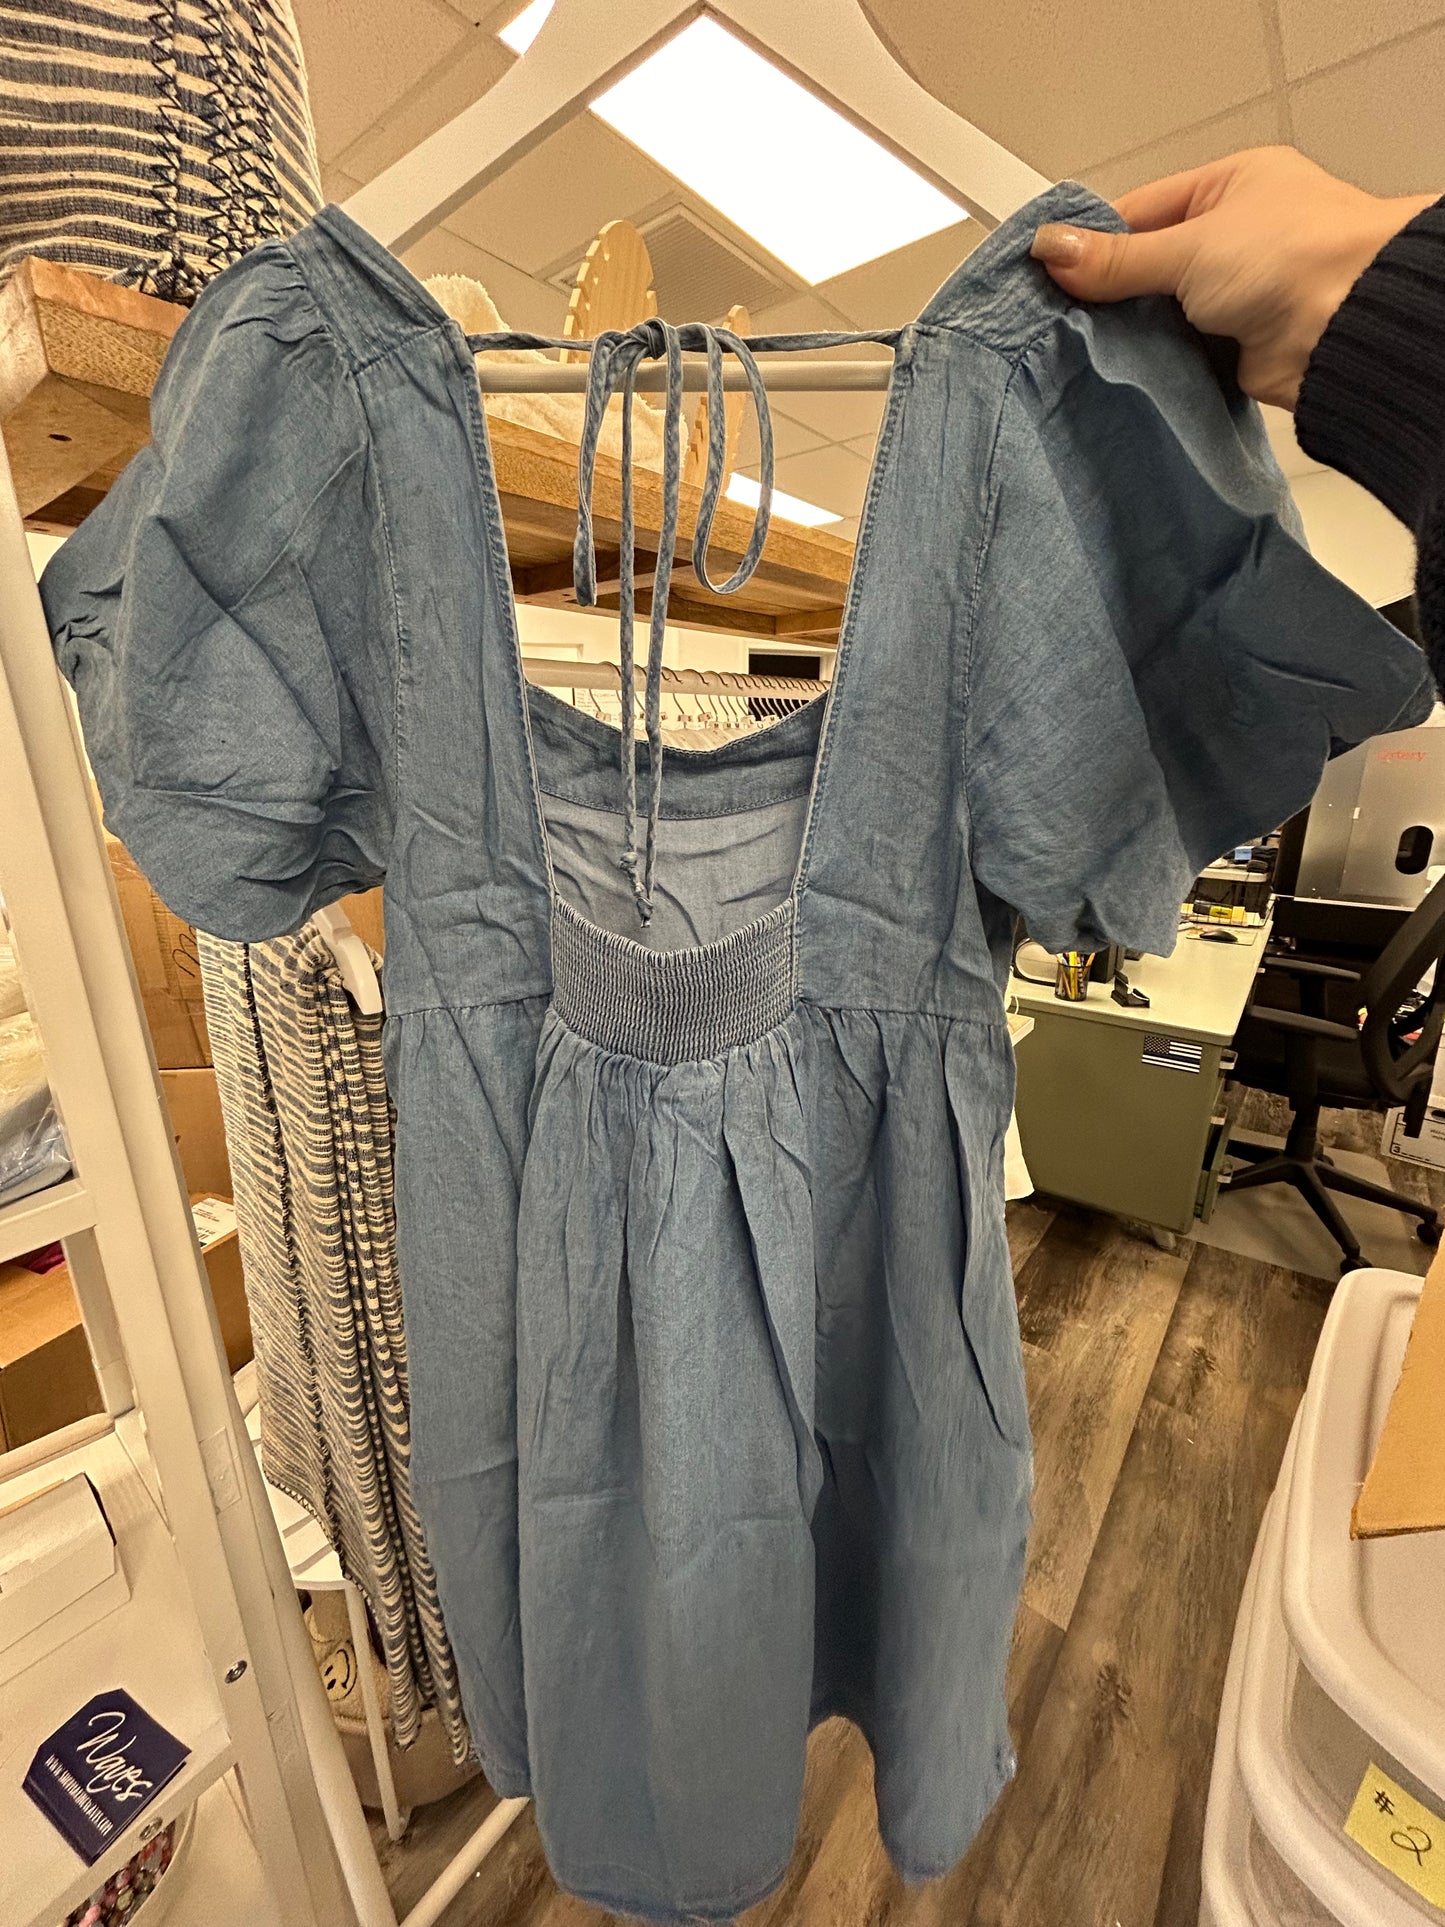 Square Neck Bubble Sleeve Babydoll Mini Dress With Pockets - Denim Blue